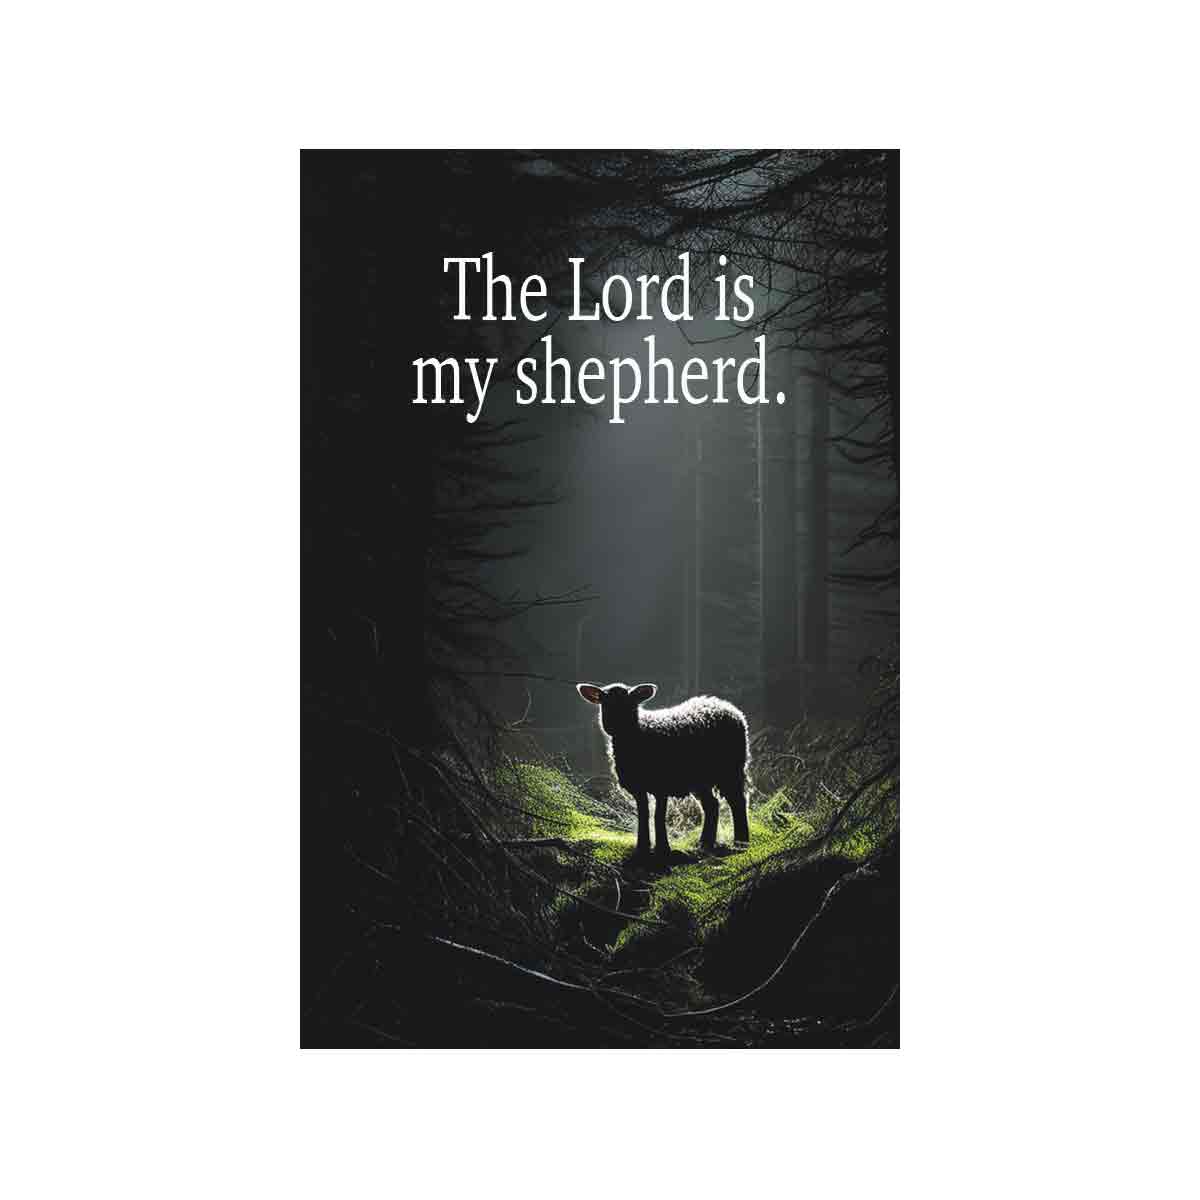 The Lord is my shepherd